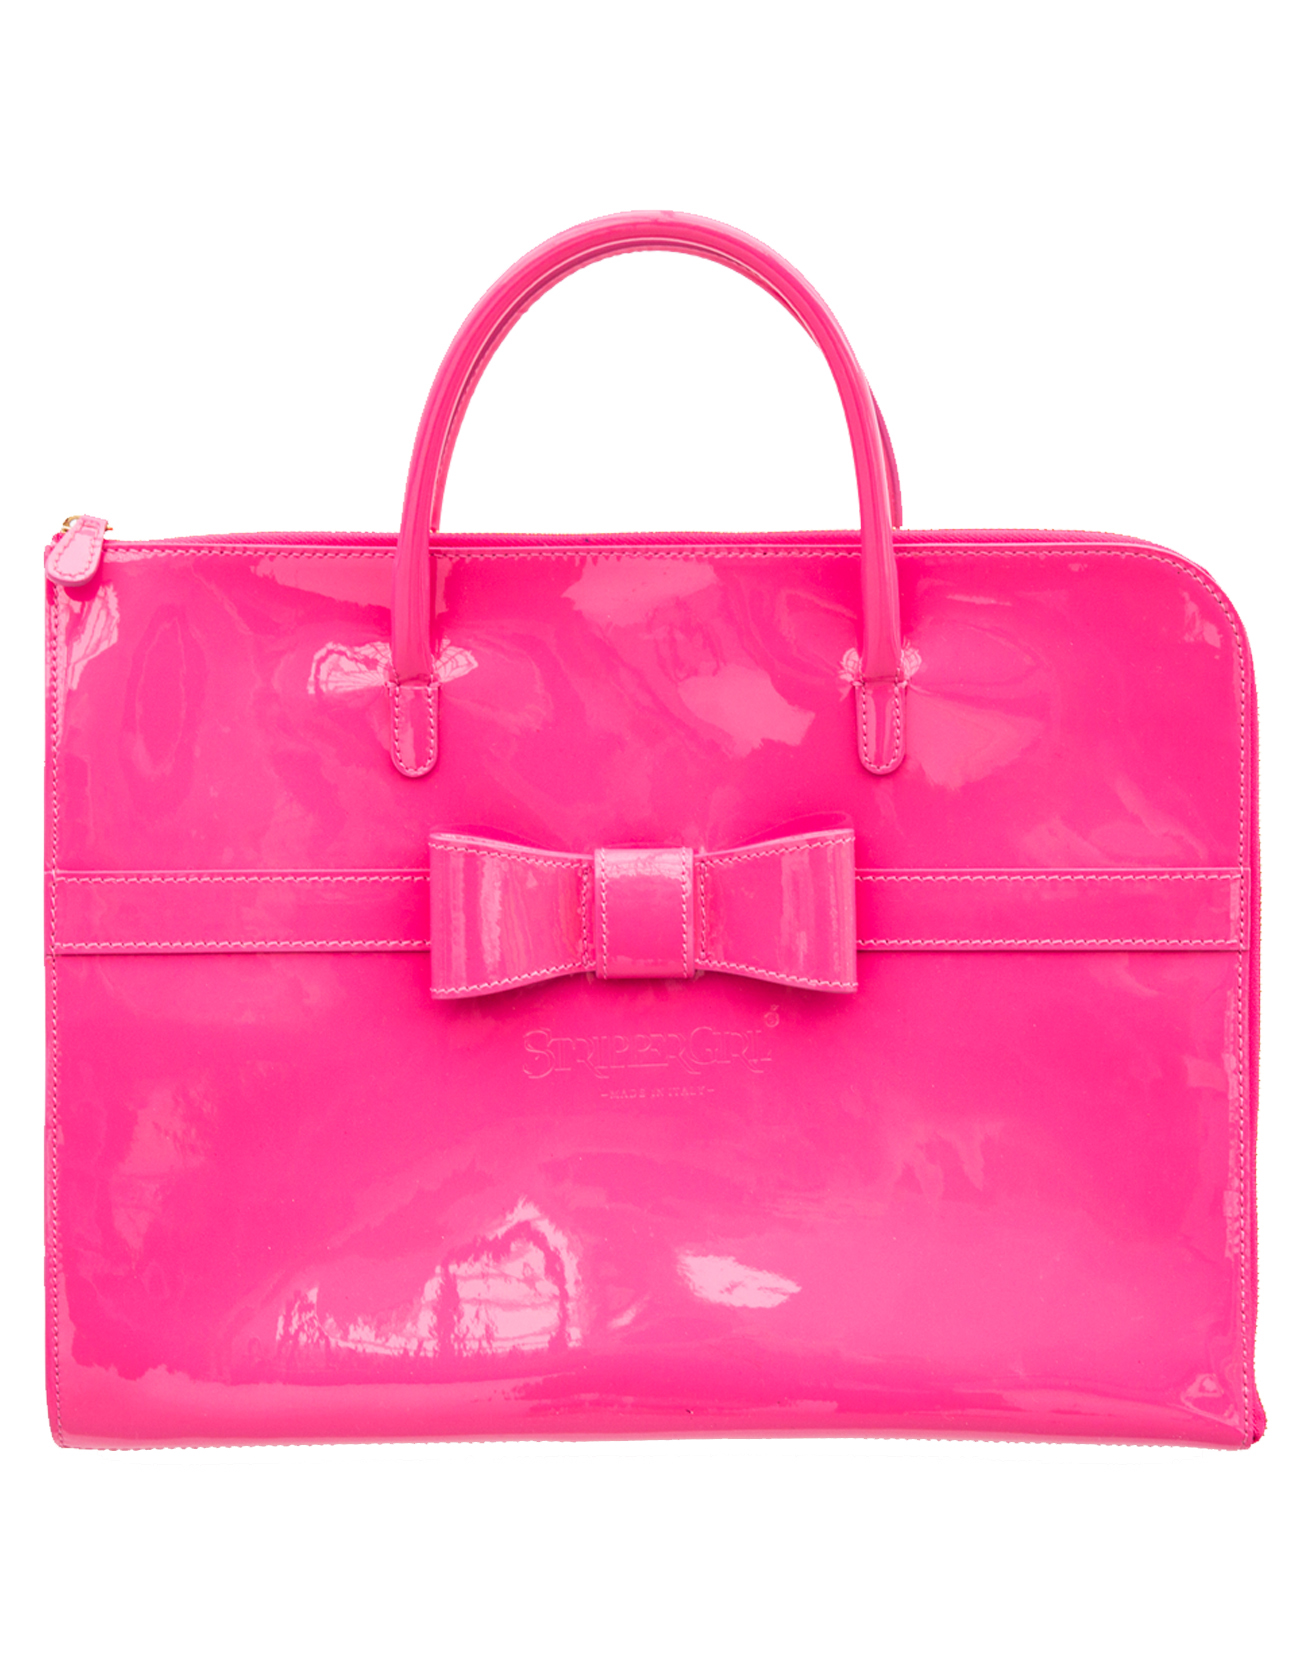 StripperGirl | The Pink-bag